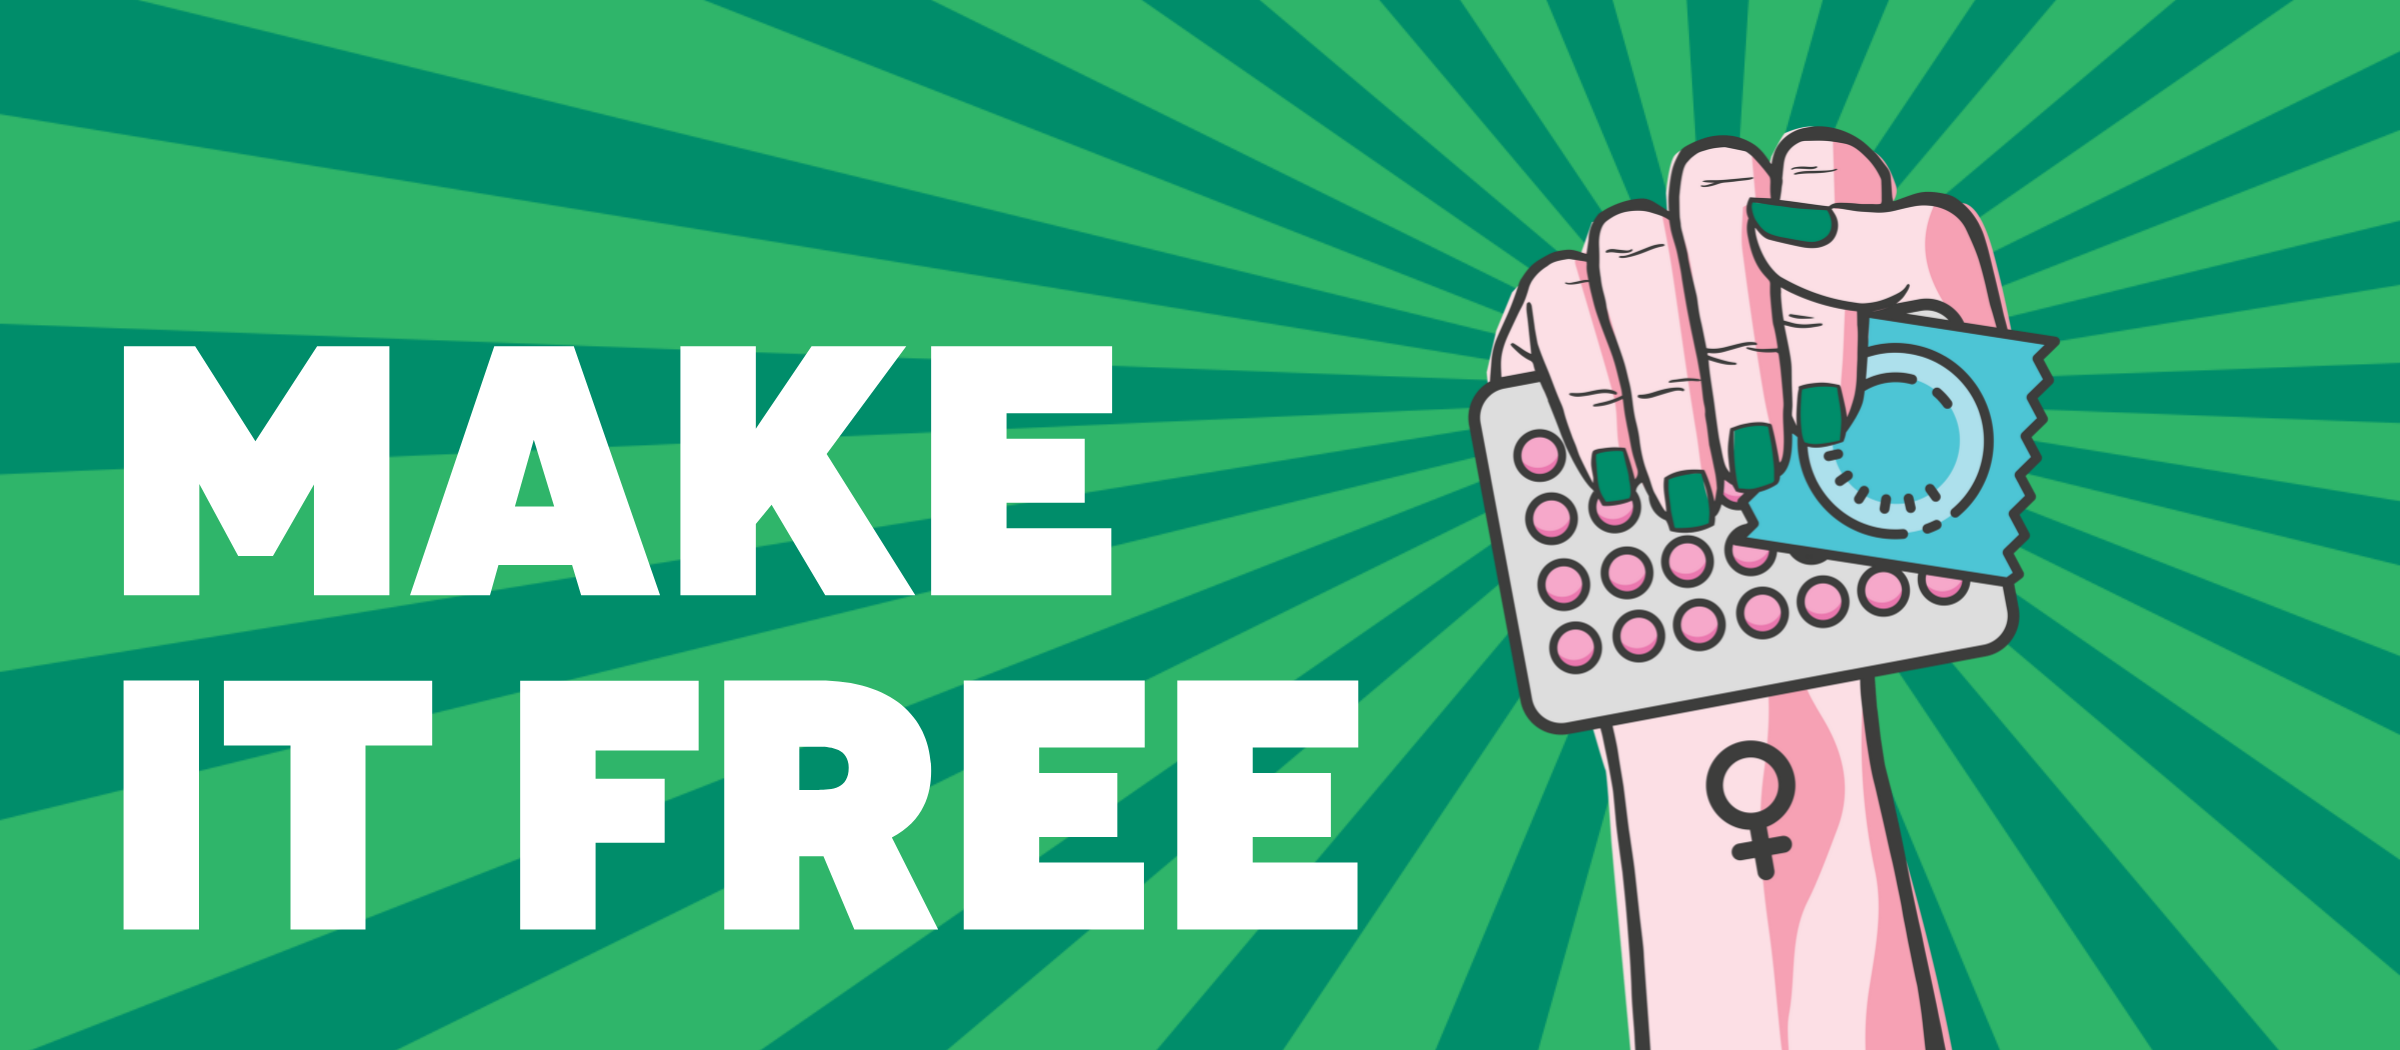 'Make It Free' - a campaign for free contraception